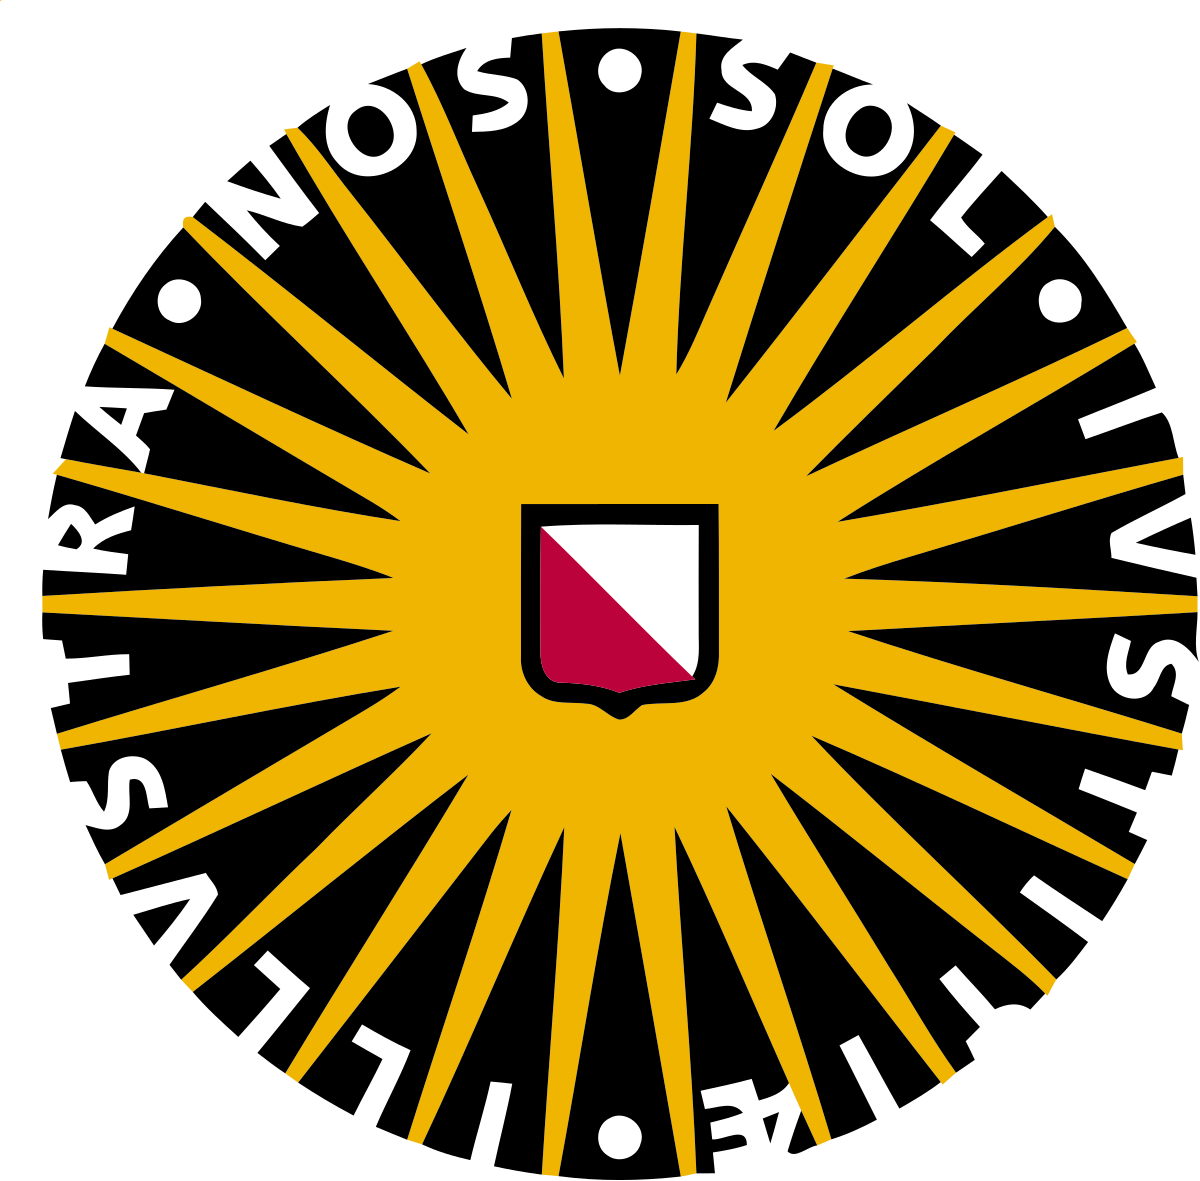 Utrecht University logo.svg